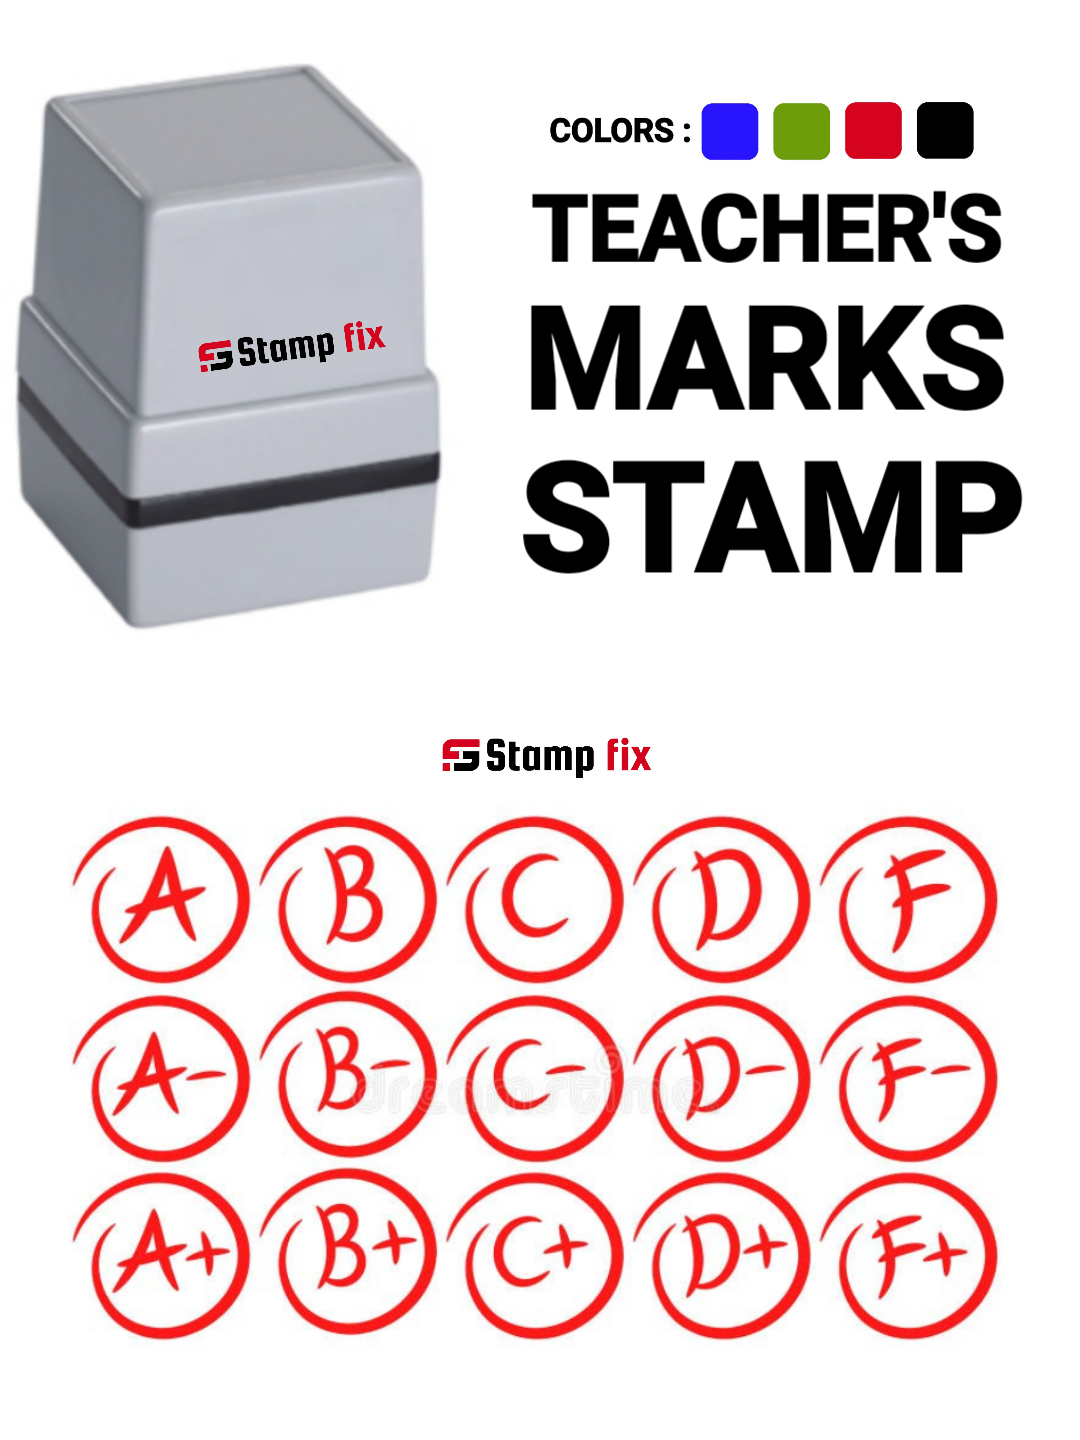 Teachers Grade stamp, Self ink stamp, pre ink stamp, sun stamp, rubber stamp, nylon stamp, polymer stamp